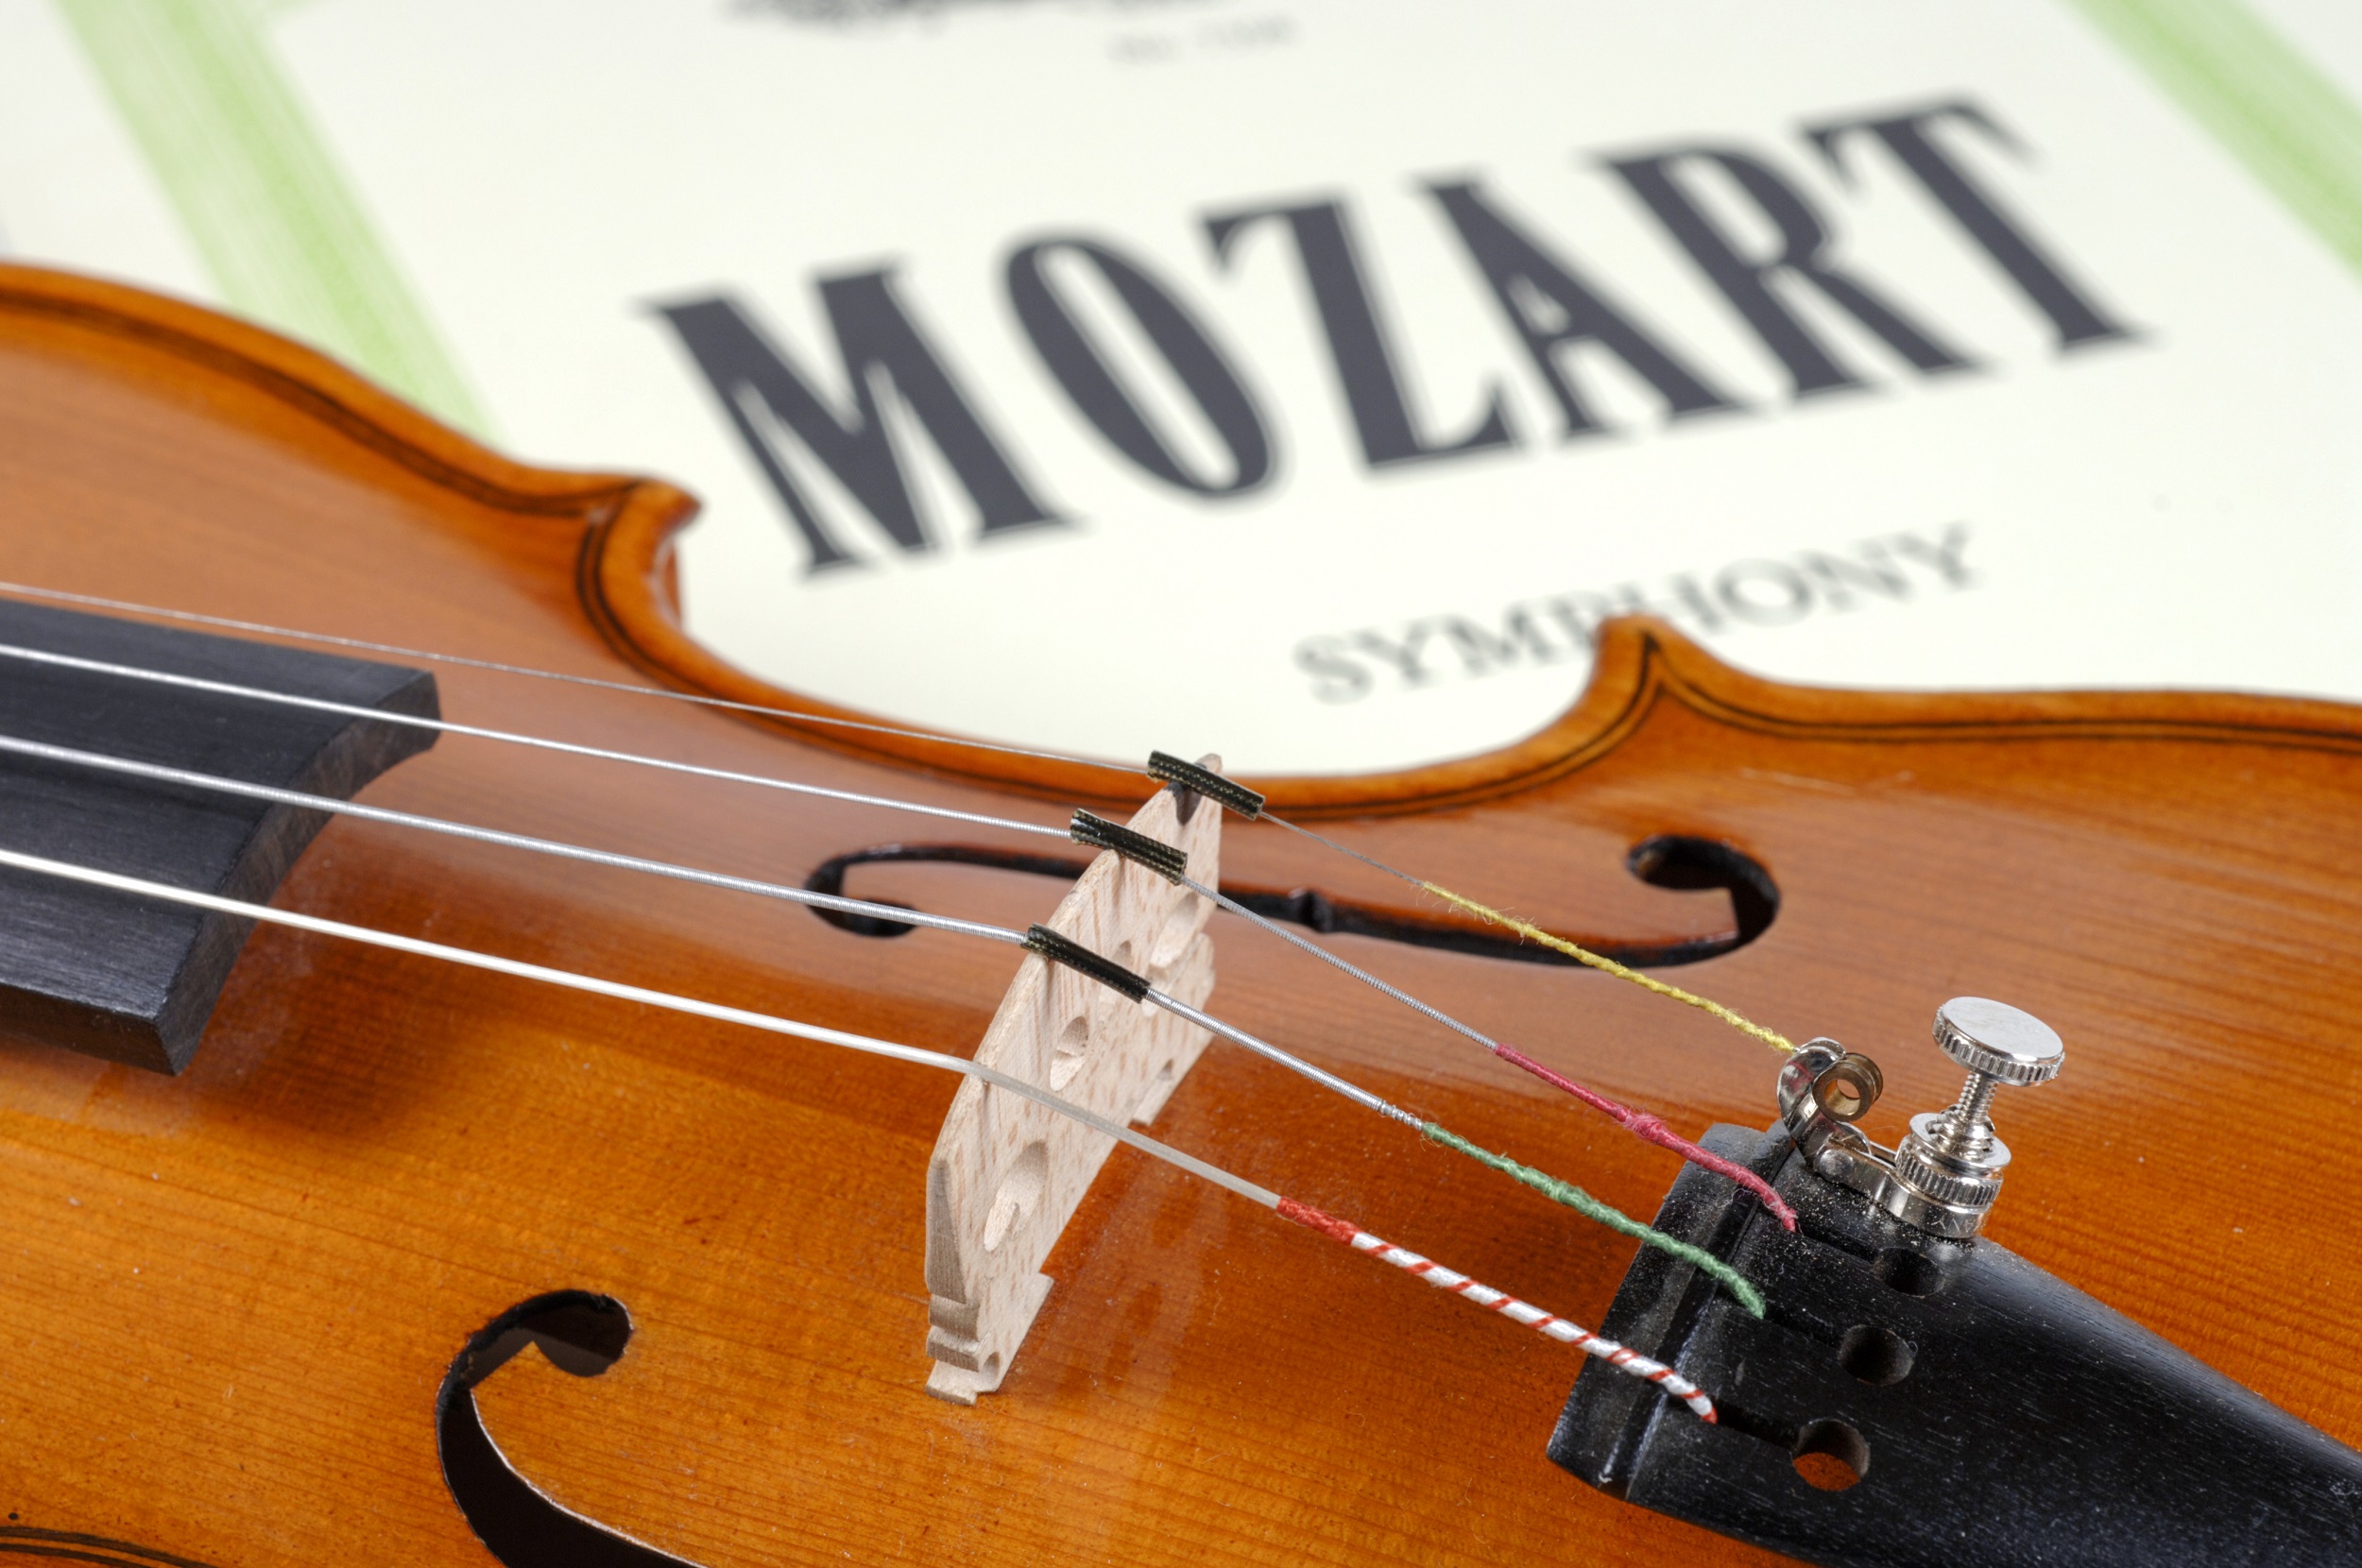 Violin on a score by Mozart